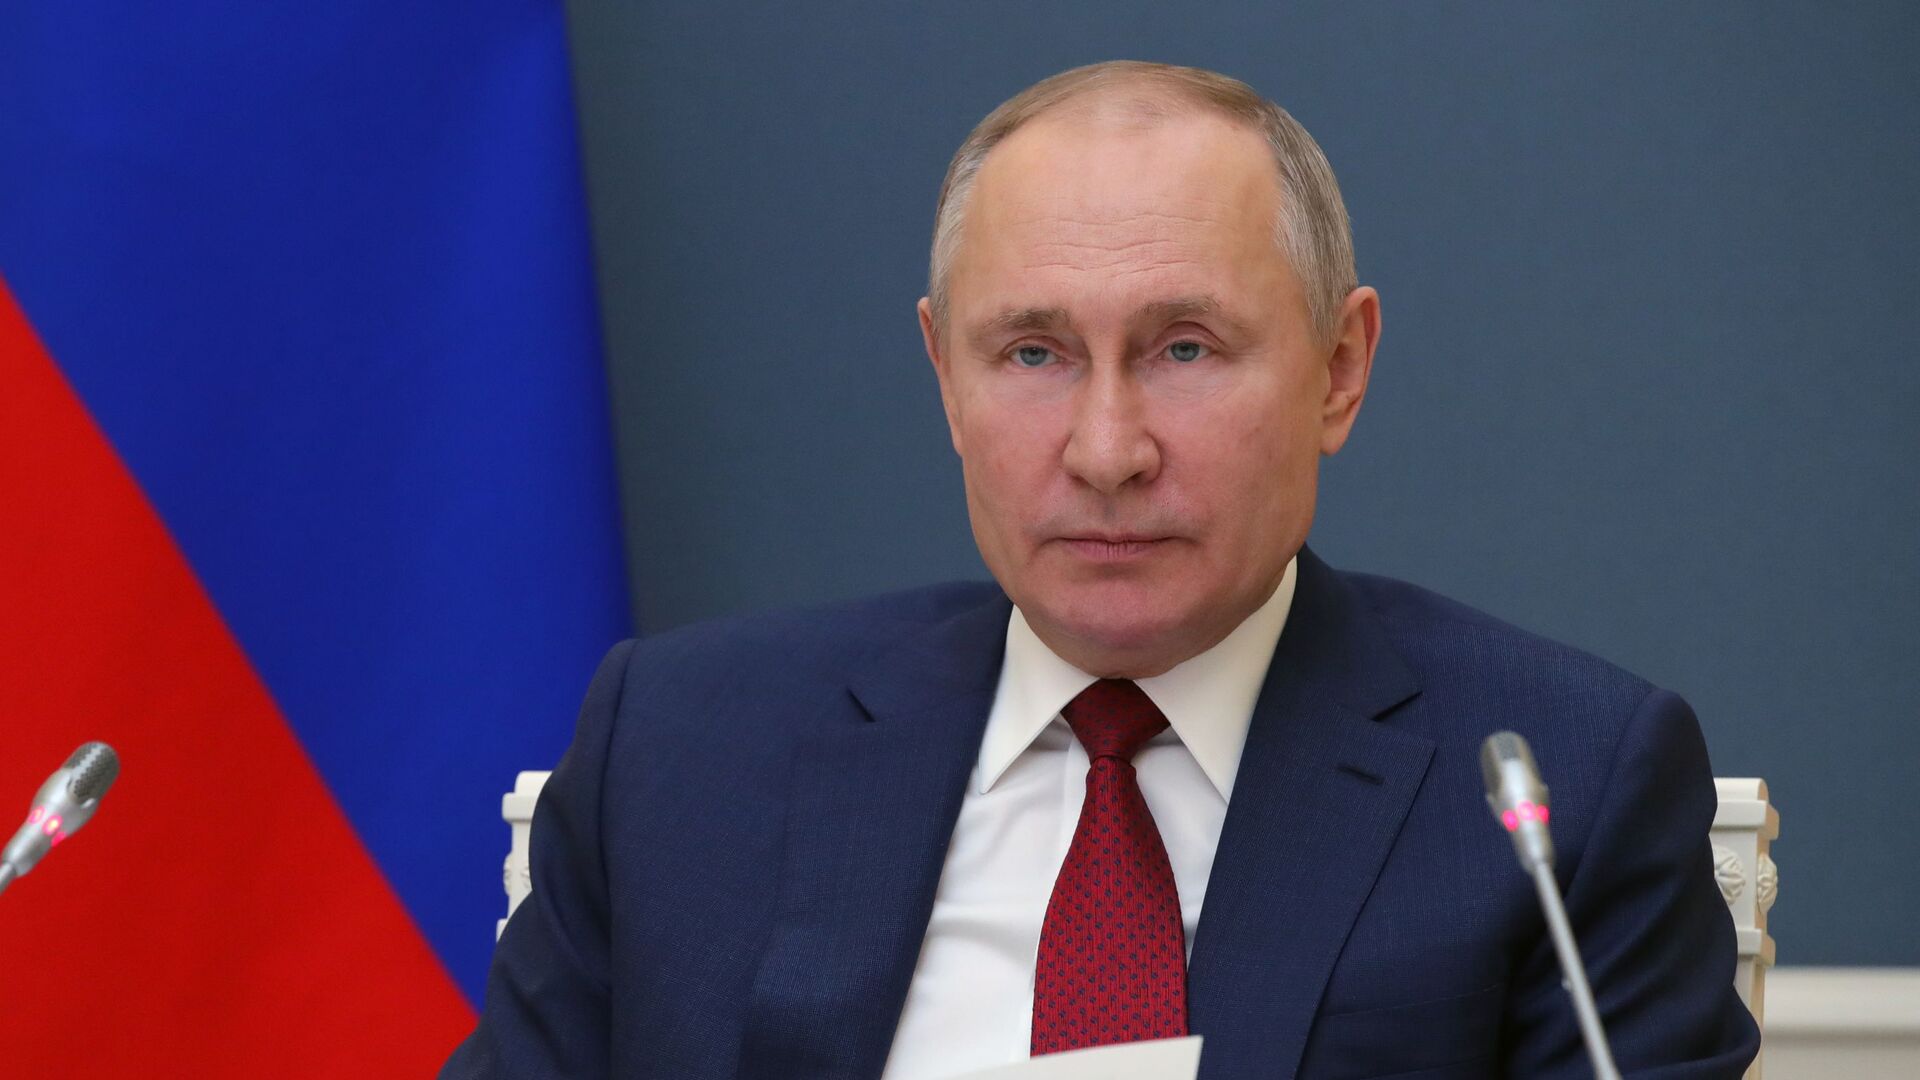 Президент РФ В. Путин выступил на сессии онлайн-форума Давосская повестка дня 2021 - Sputnik Таджикистан, 1920, 21.04.2021